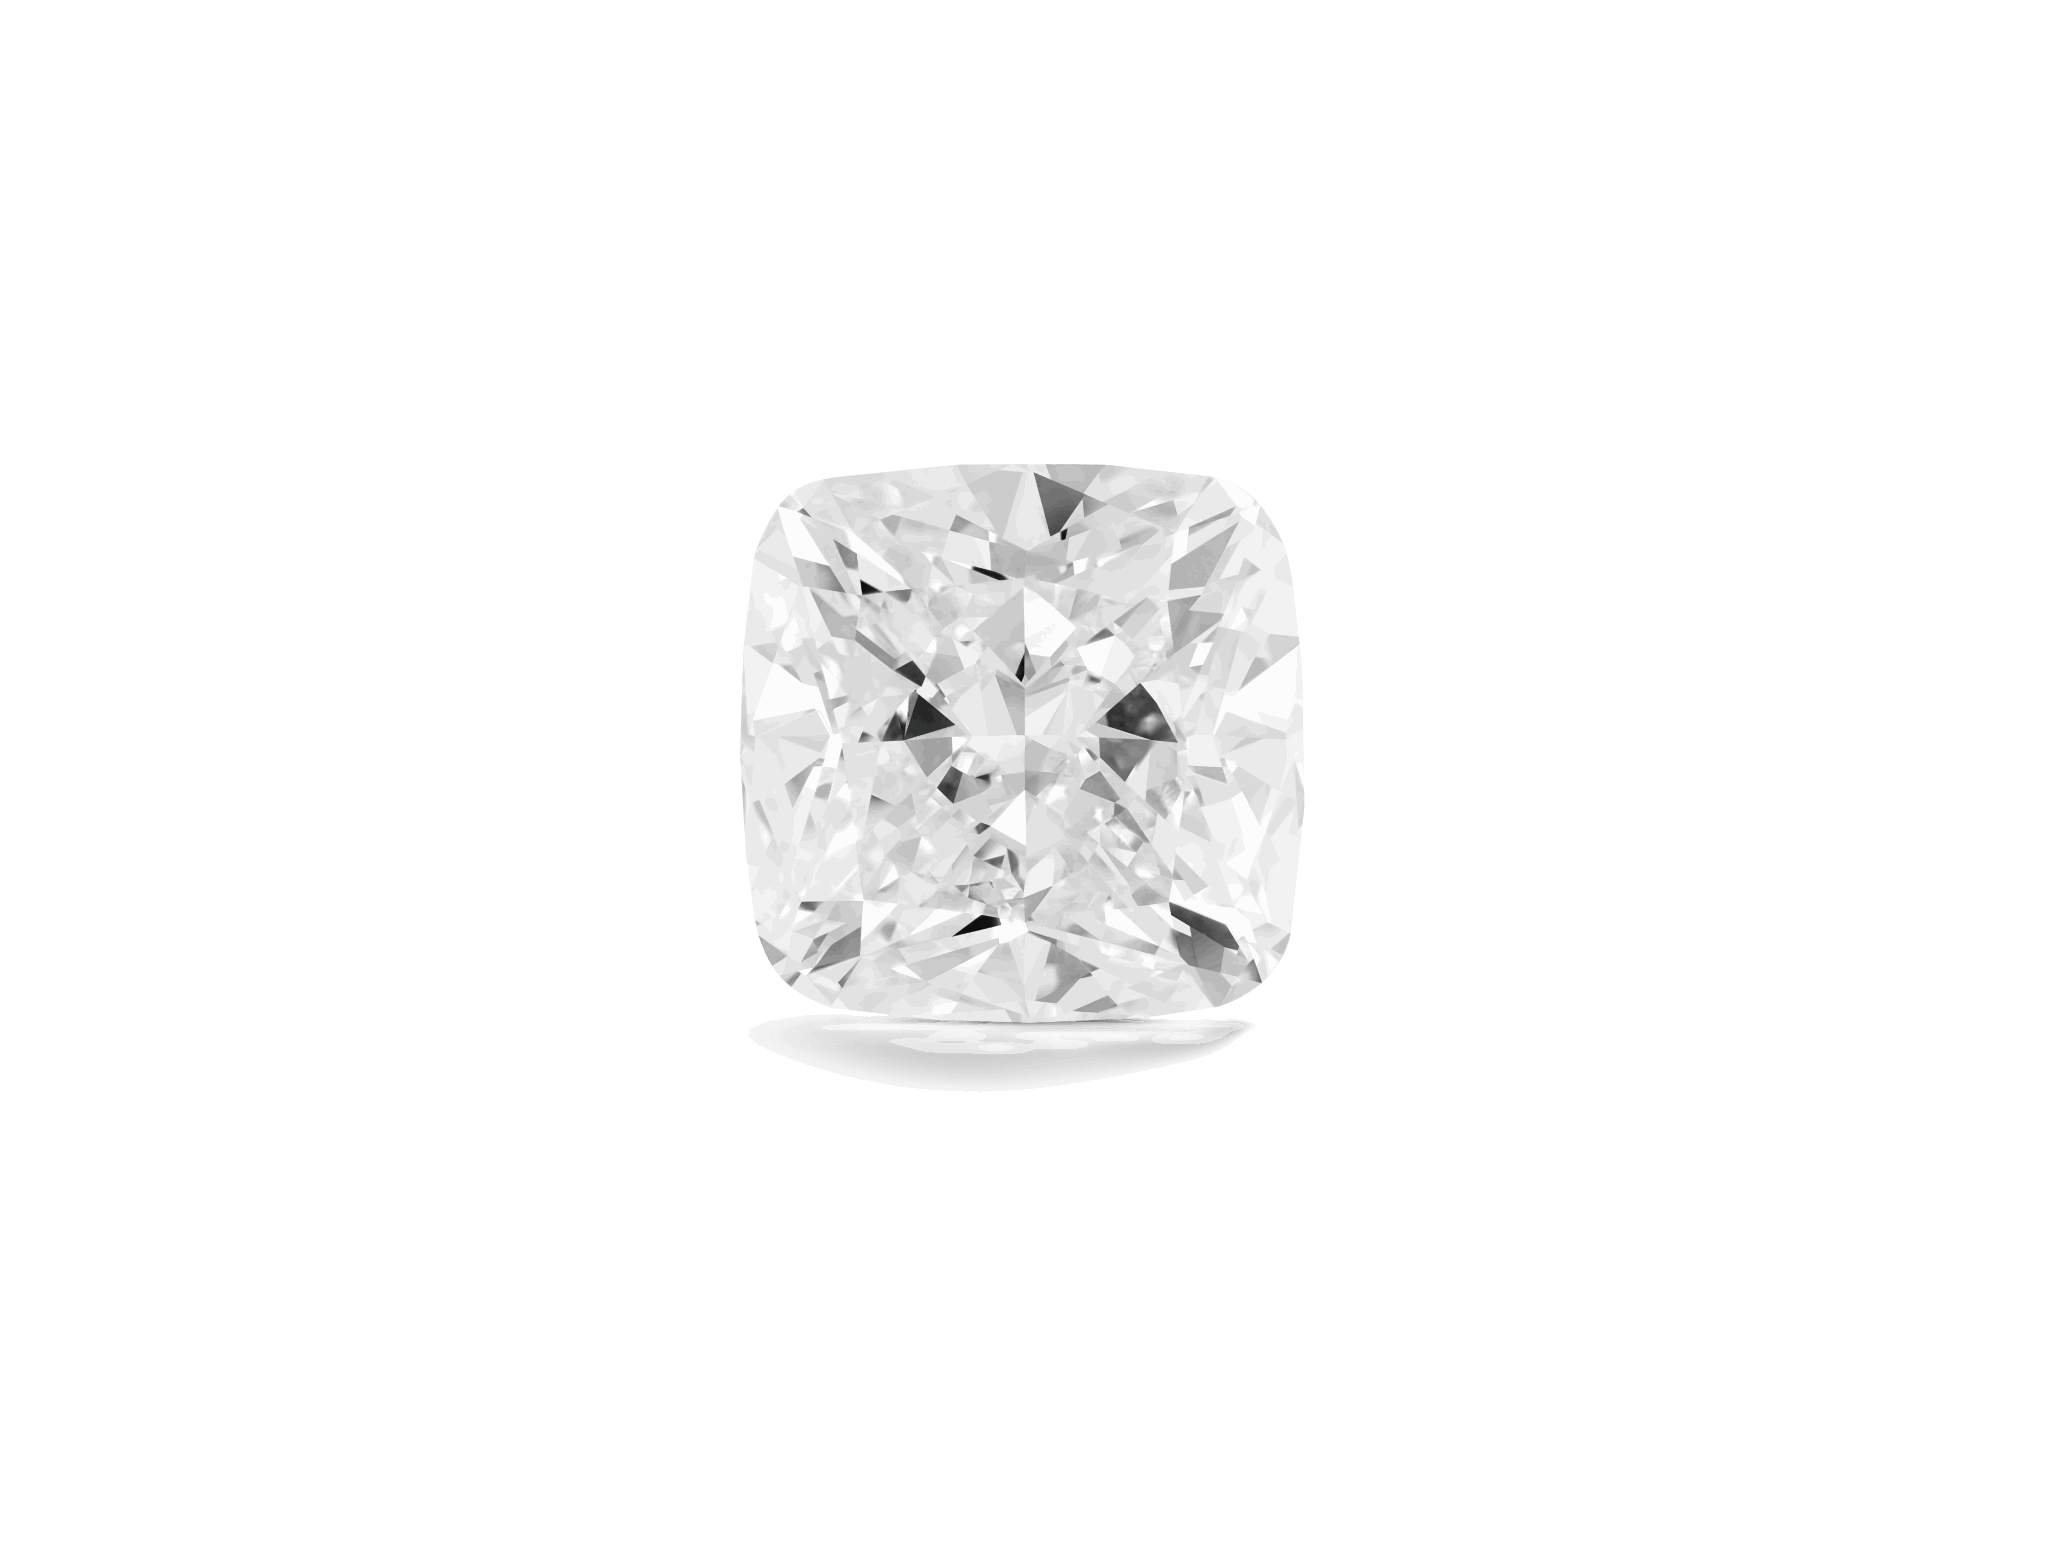 Birds eye view of Lightbox Finest™ 3 carat cushion cut diamond